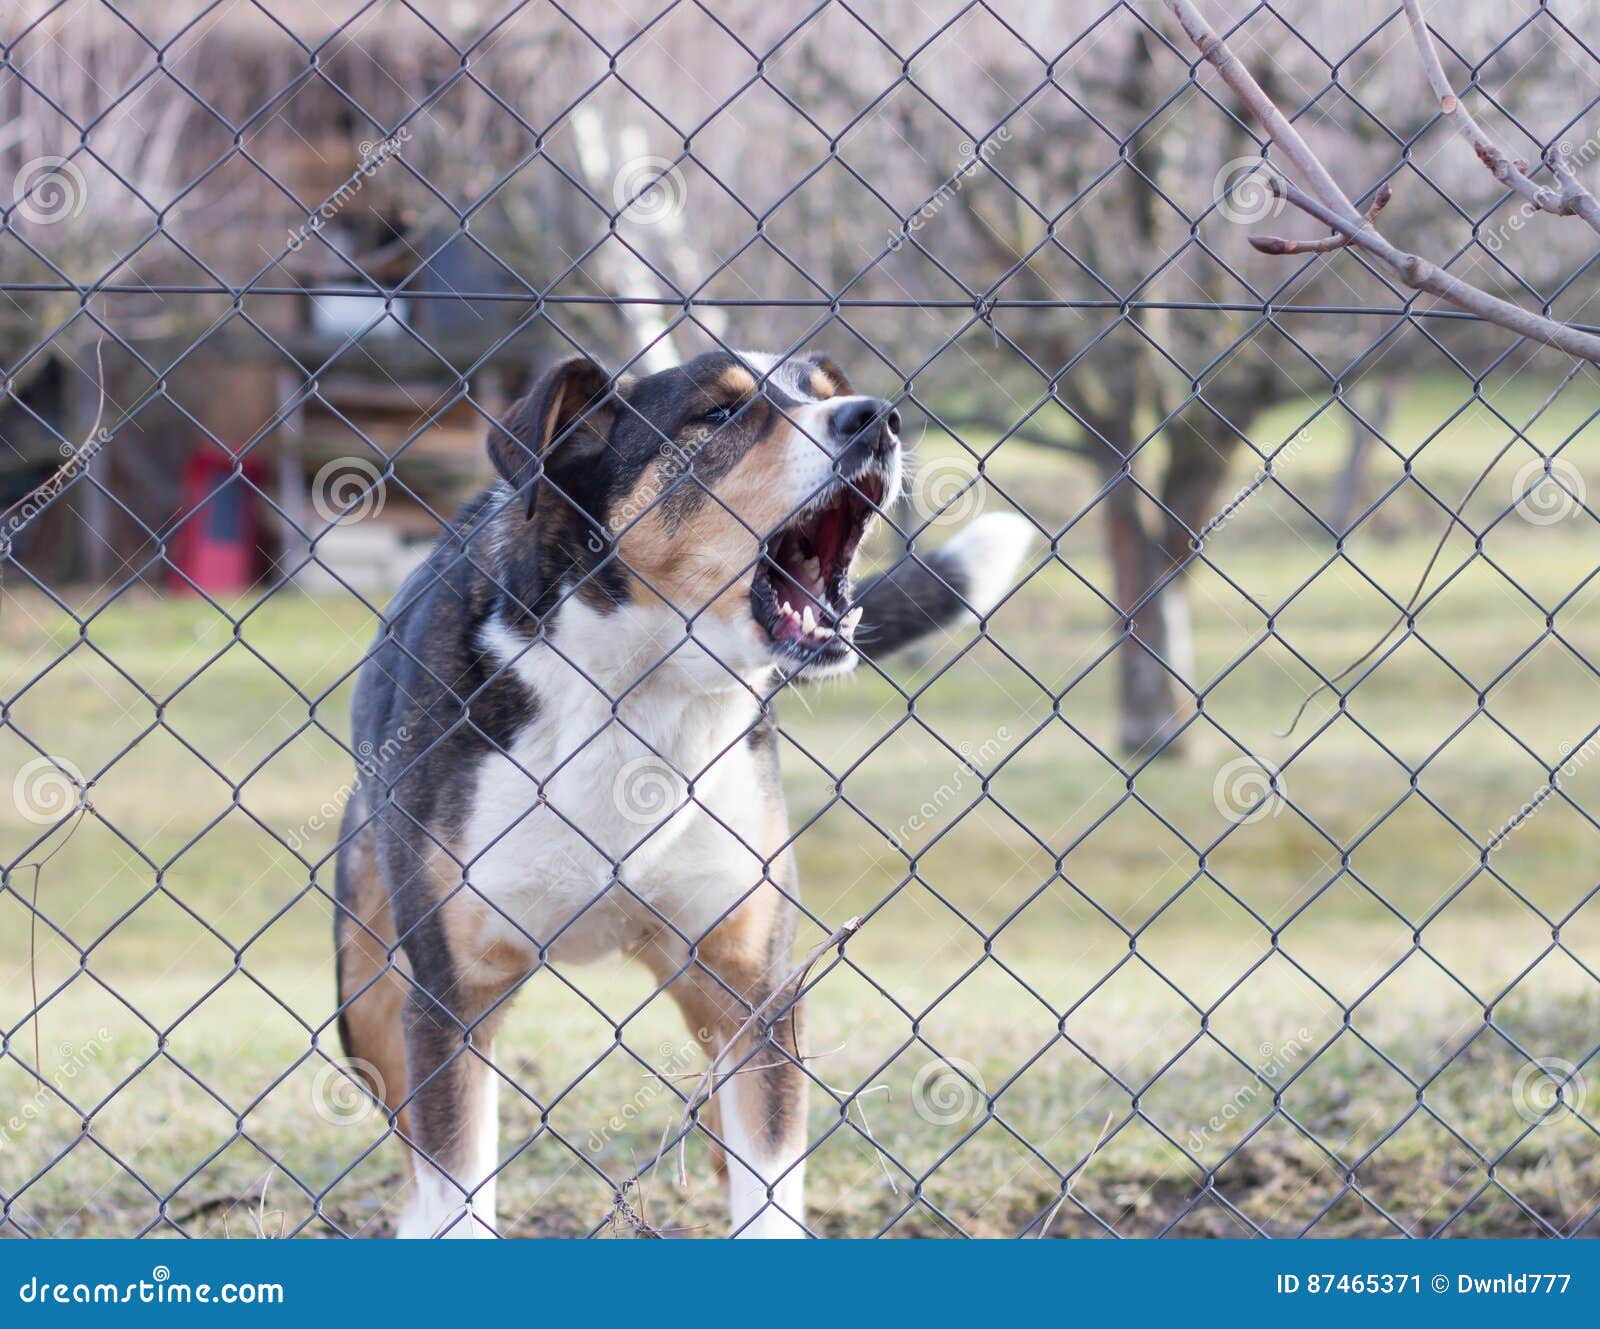 aggressive barking dog behind fence guarding garden.